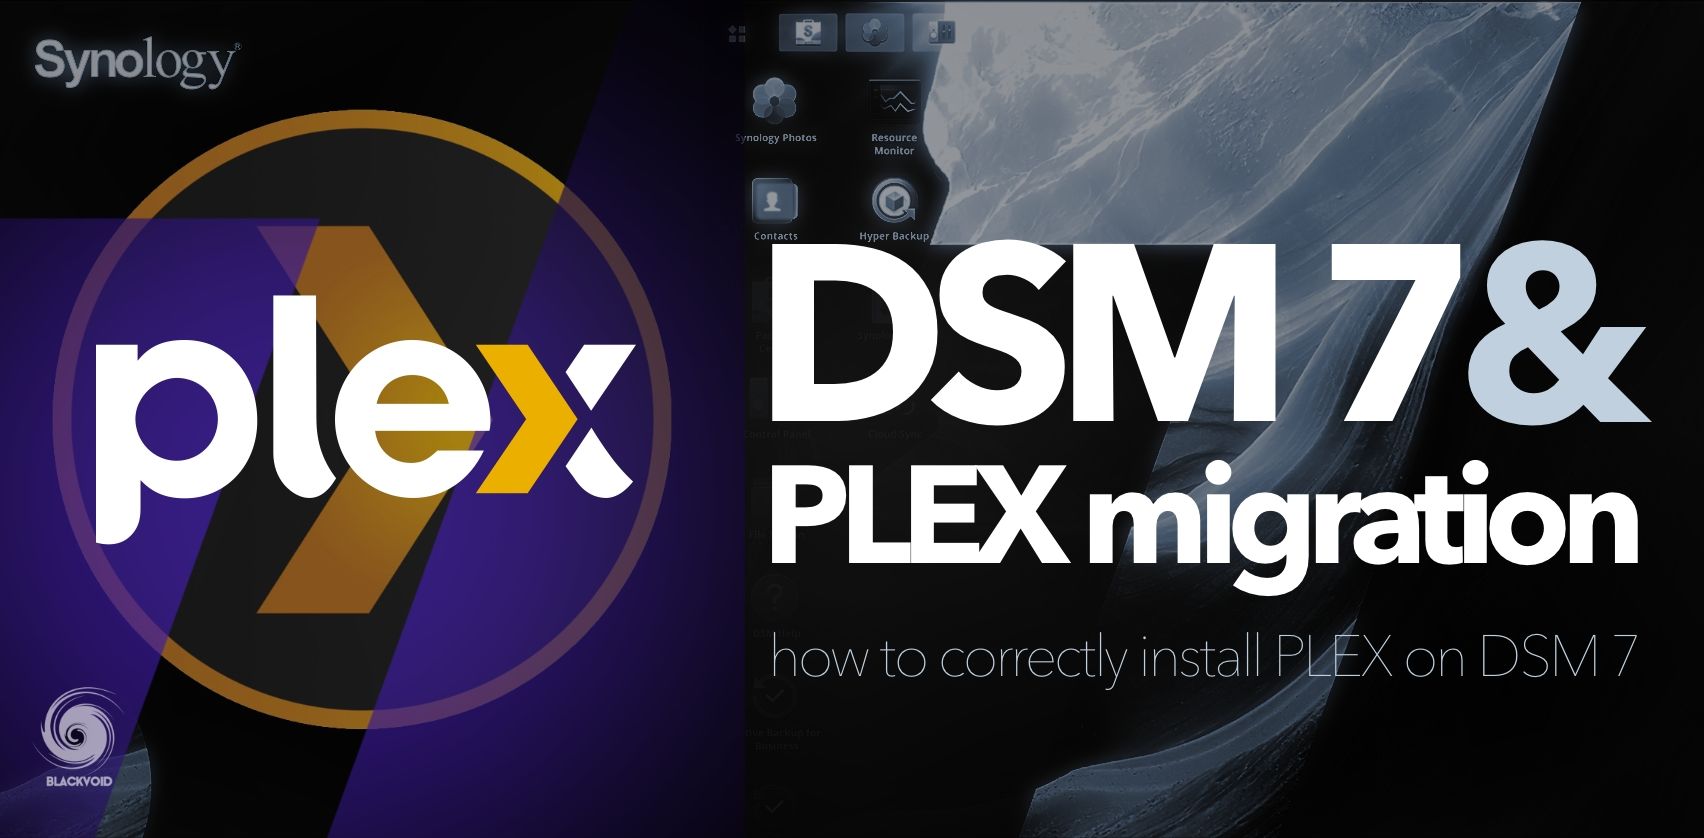 PLEX migration with DSM 7